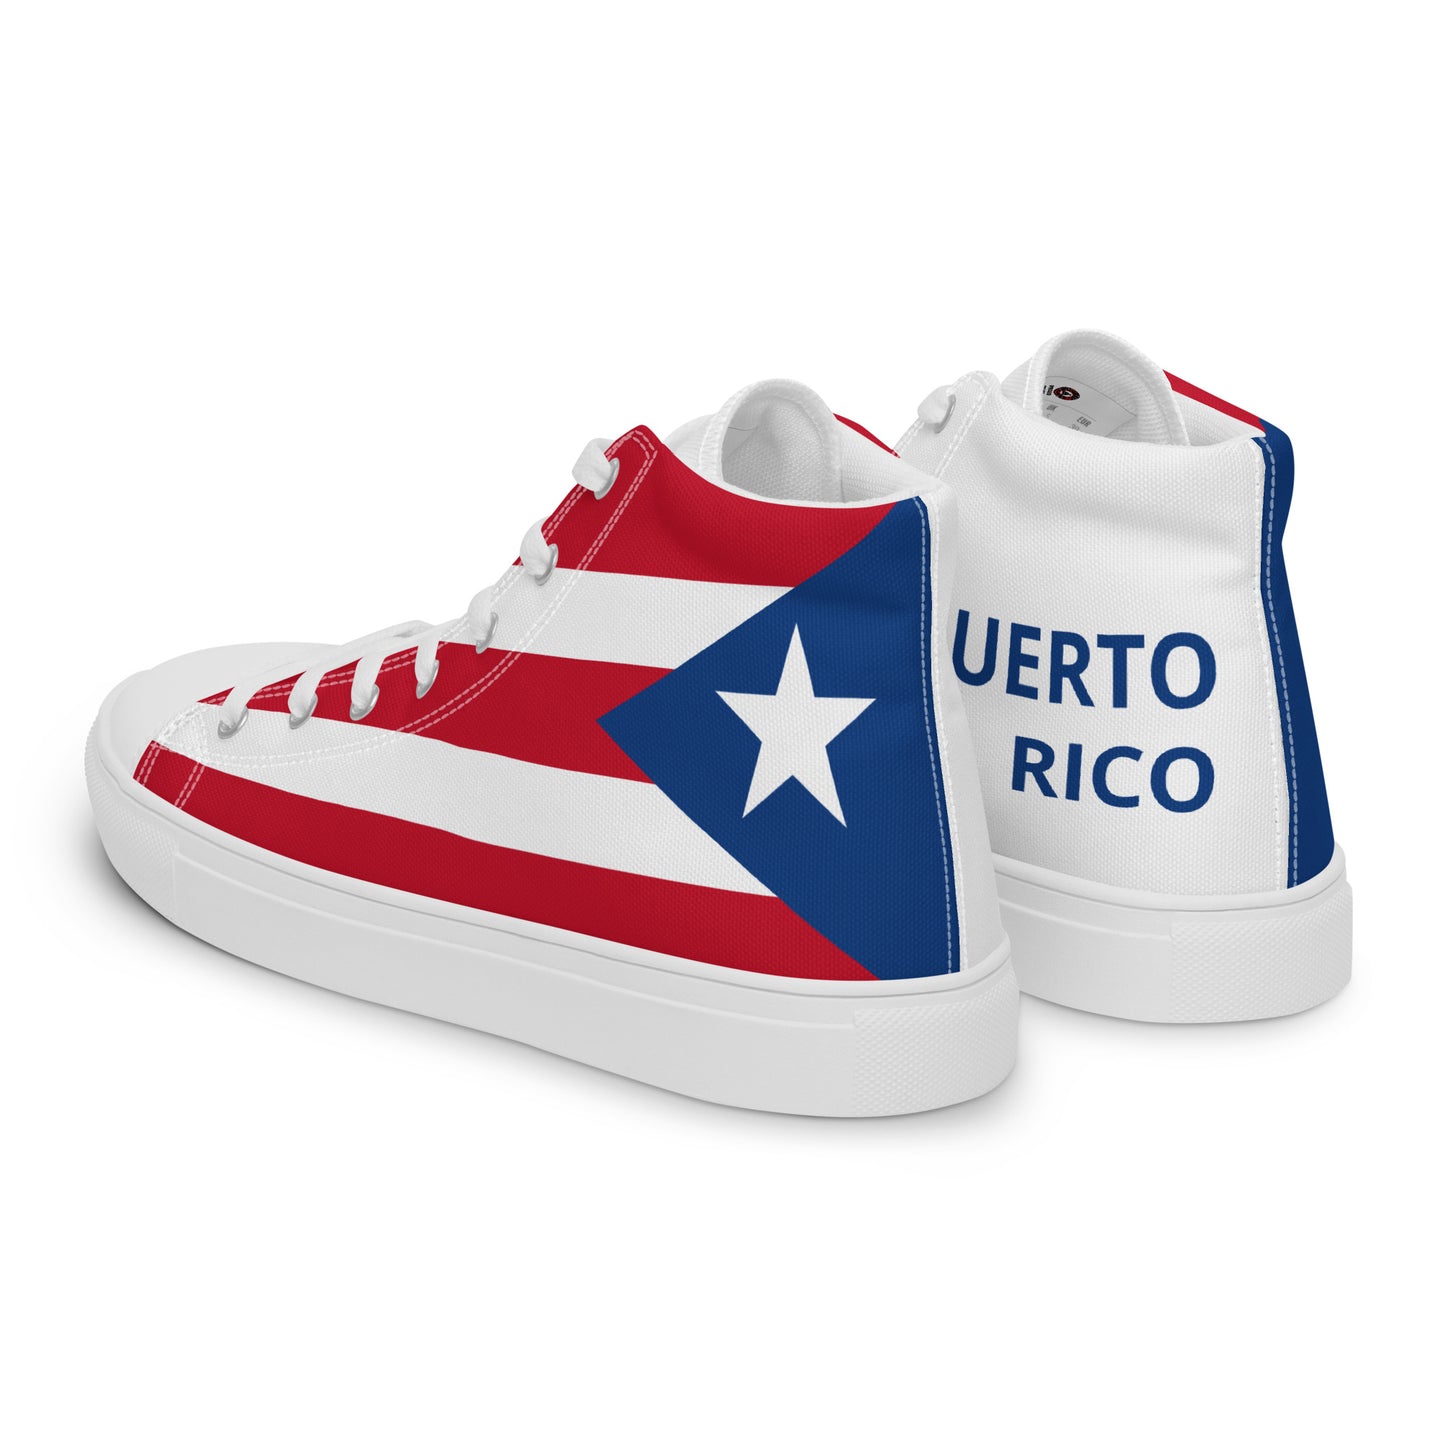 Puerto Rico - Women - Bandera - High top shoes